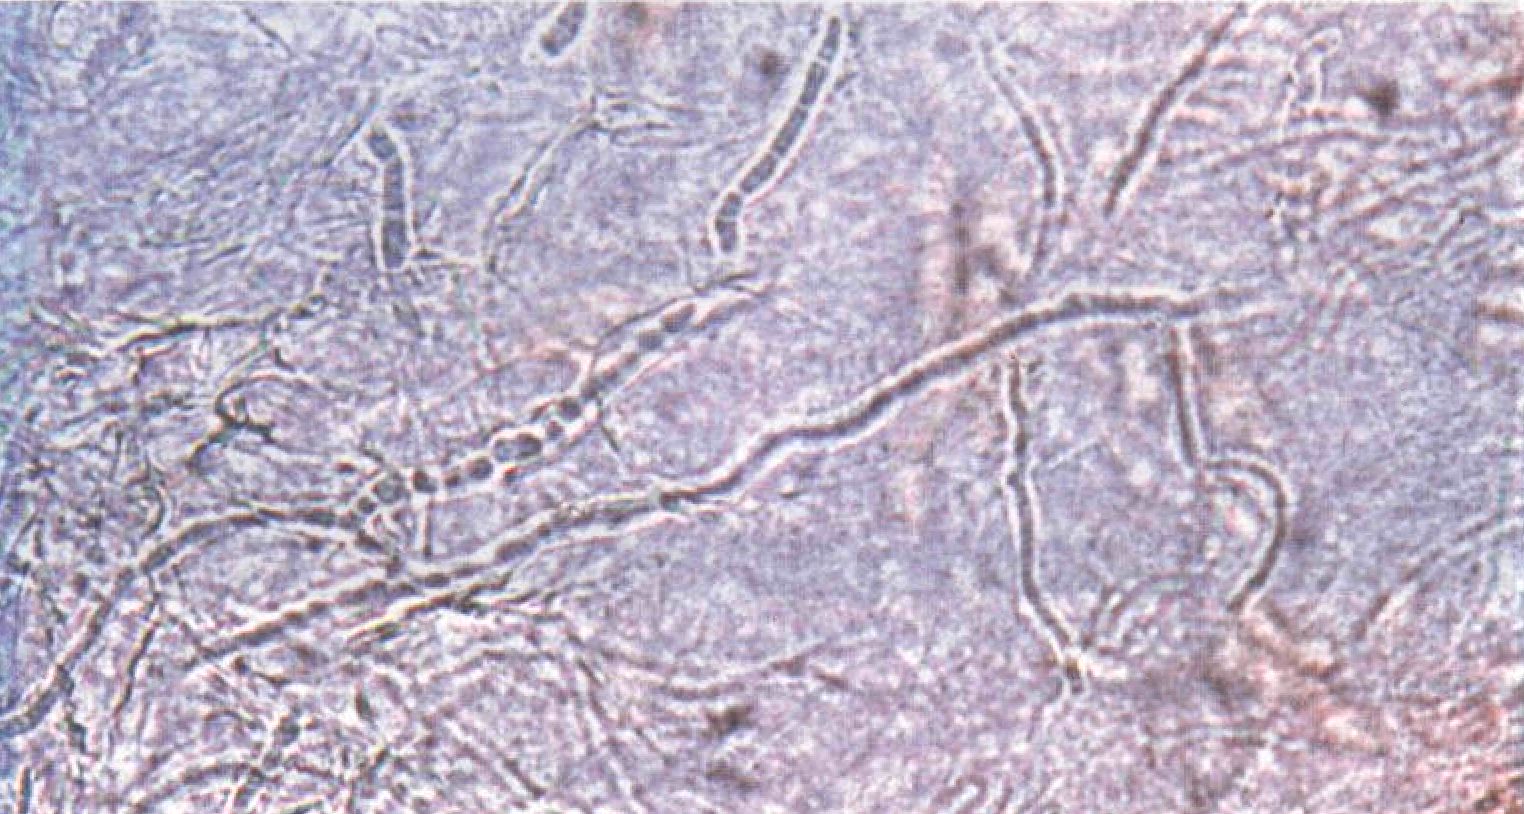 На коже обнаружены споры. Микроскопия Trichophyton rubrum. Мицелий гриба микроскопия. Микоз кожи микроскопия.